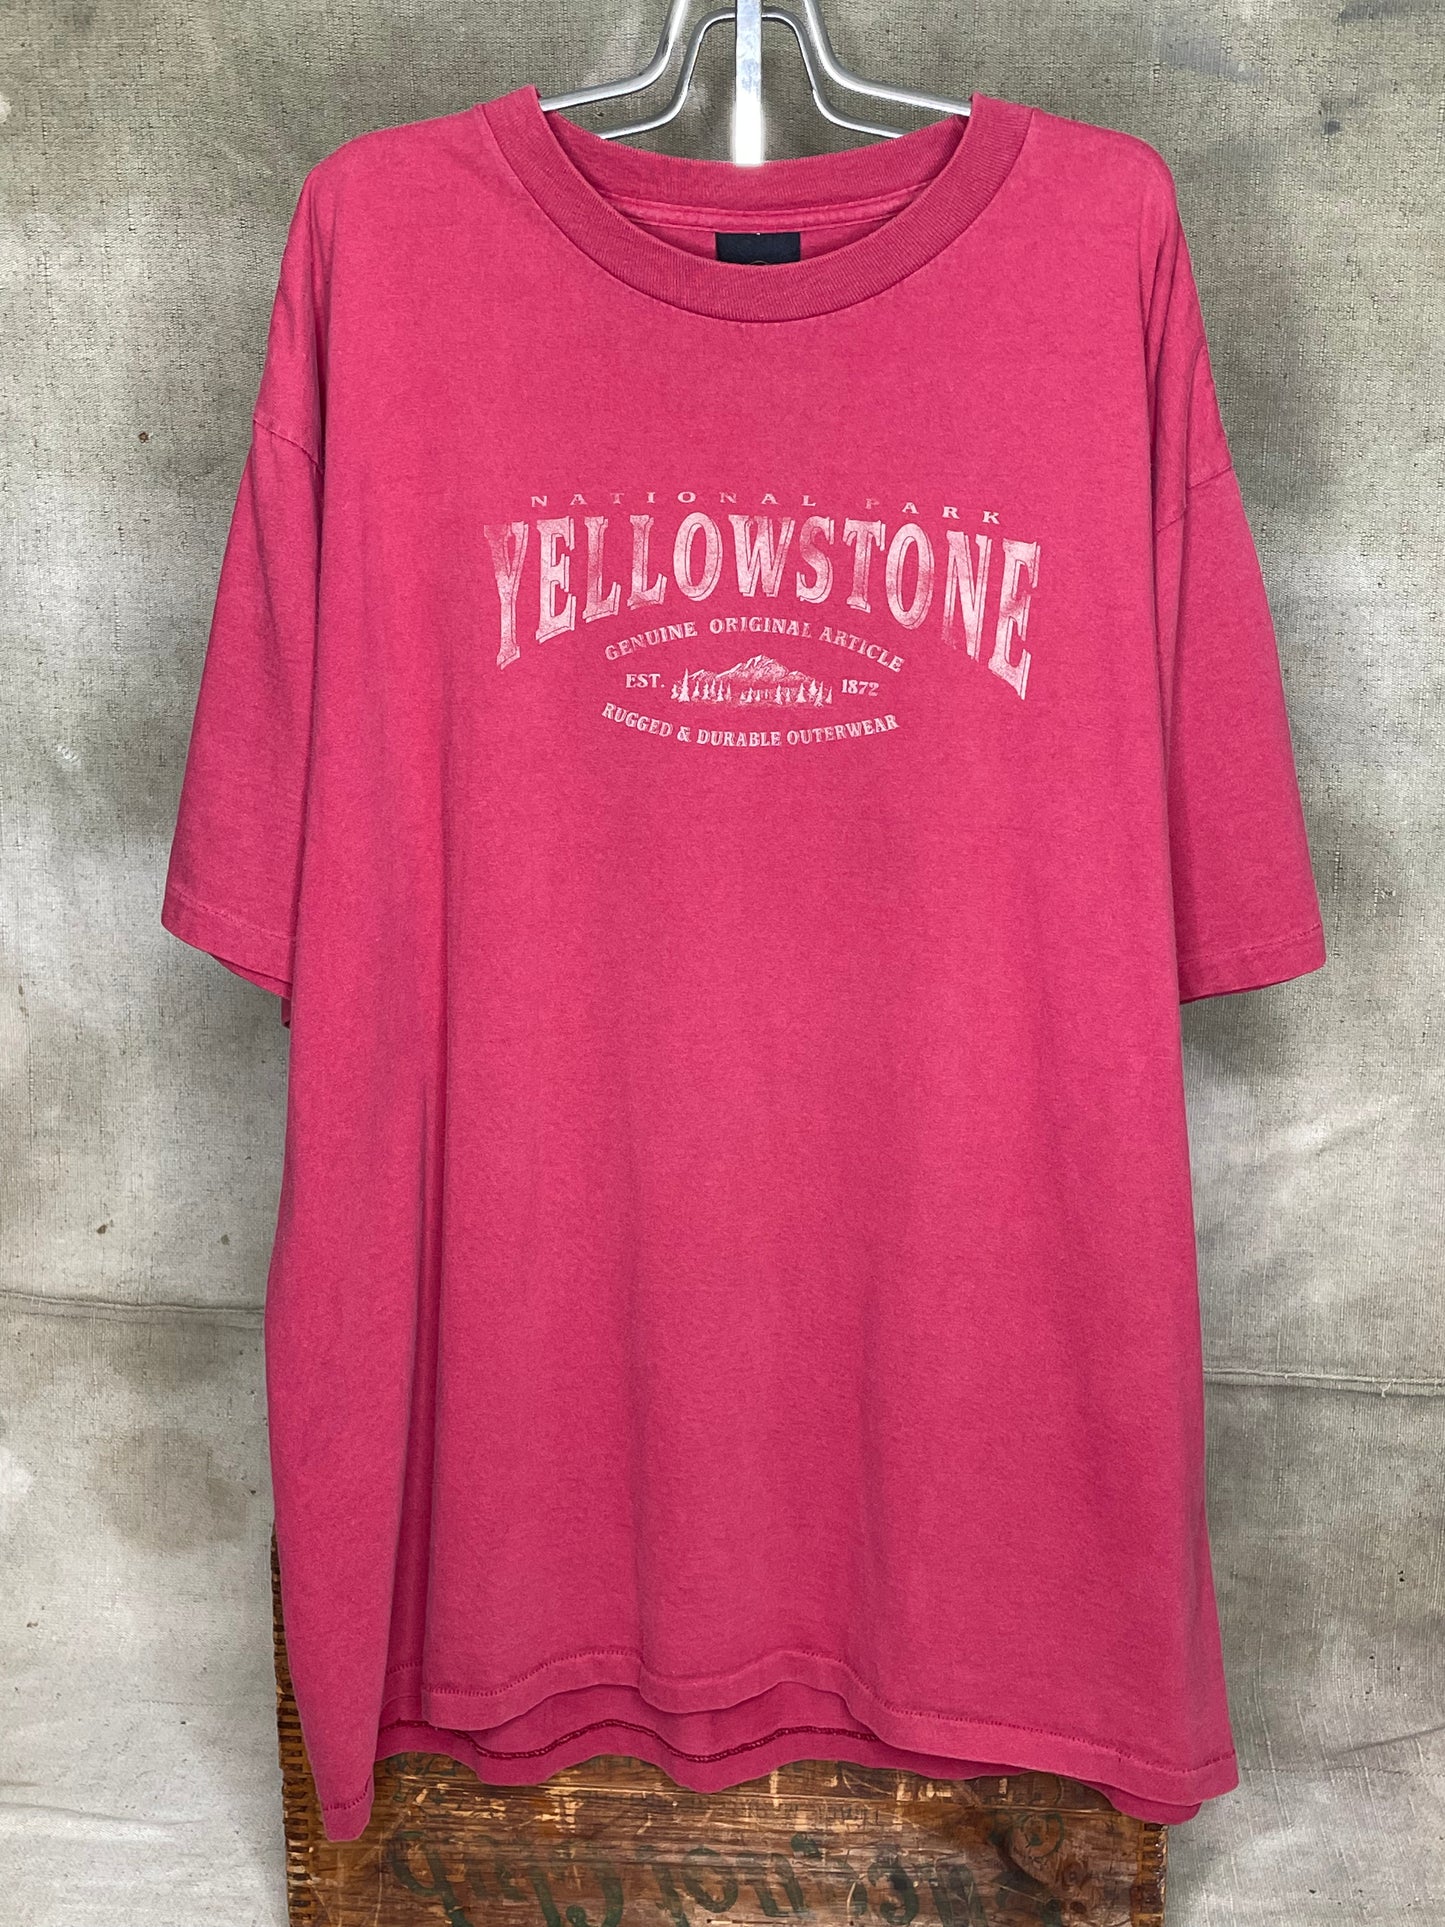 Vintage XL/XXL Yellowstone Faded Single Stitch Shirt